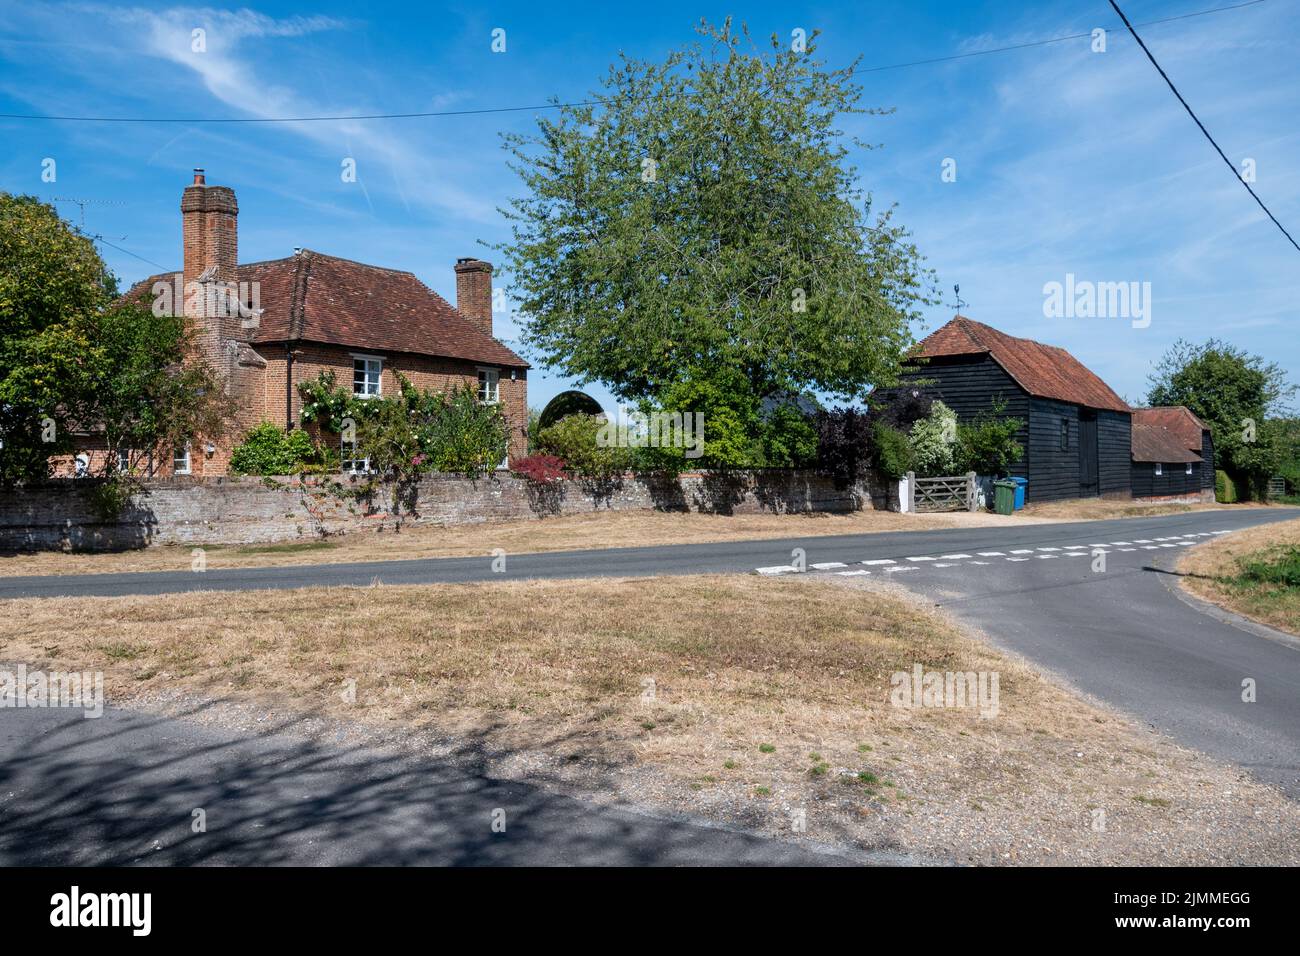 Mattingley village, street view, Hampshire, England, UK Stock Photo